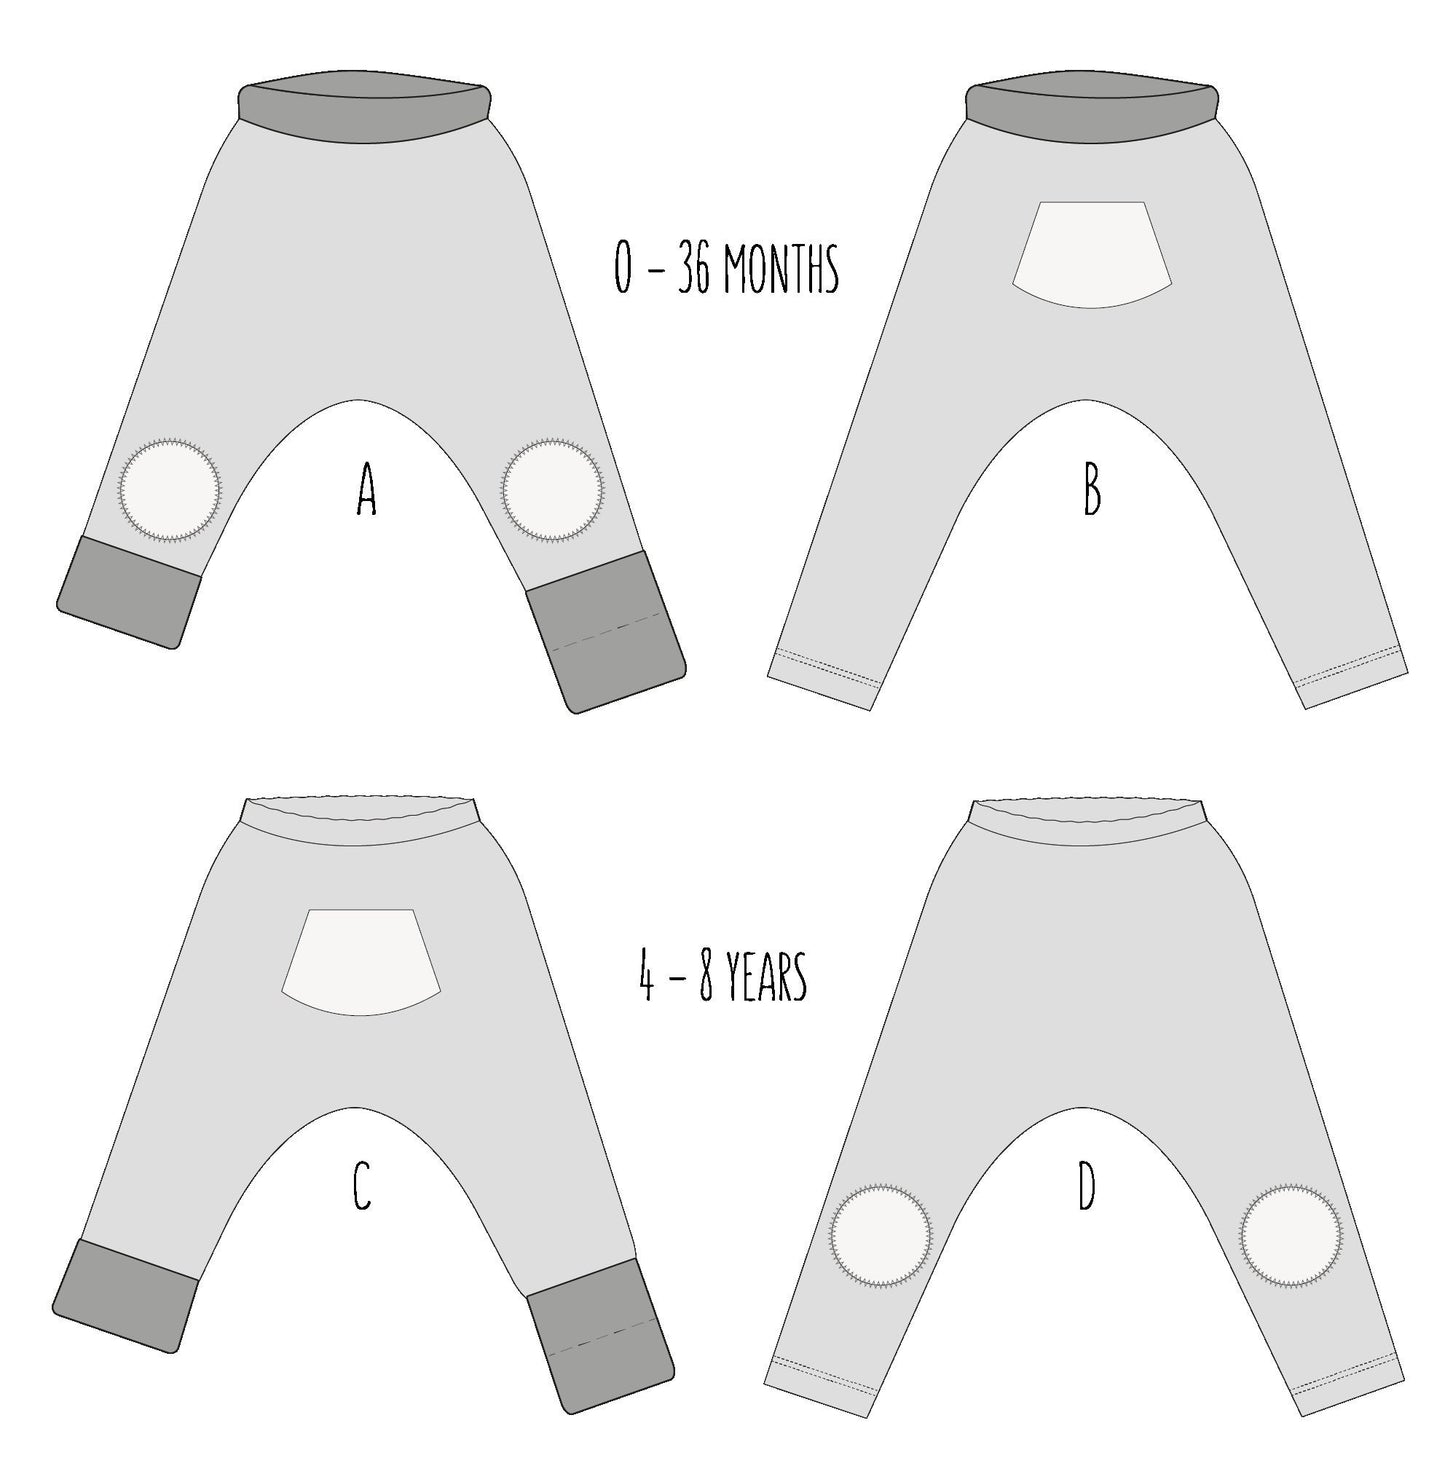 LUNA Harem pants - sewing pattern